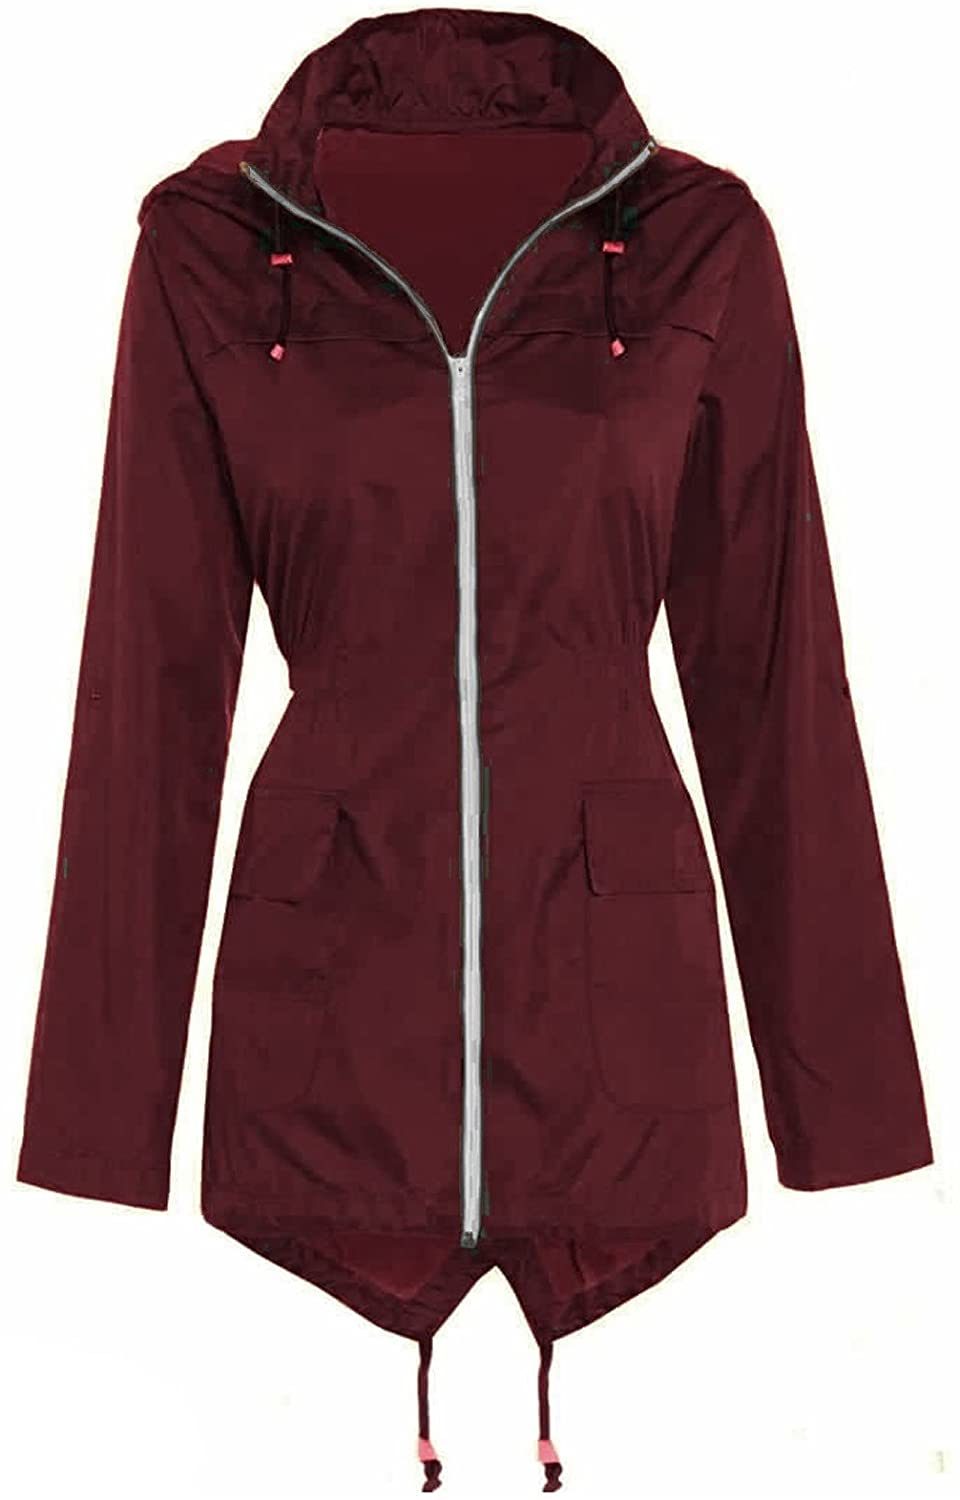 Mujeres Plain Fishtail Hooded Lightweight Rain Parka Polyester Ladies Raincoat Jacket Two Pockets Plus Size